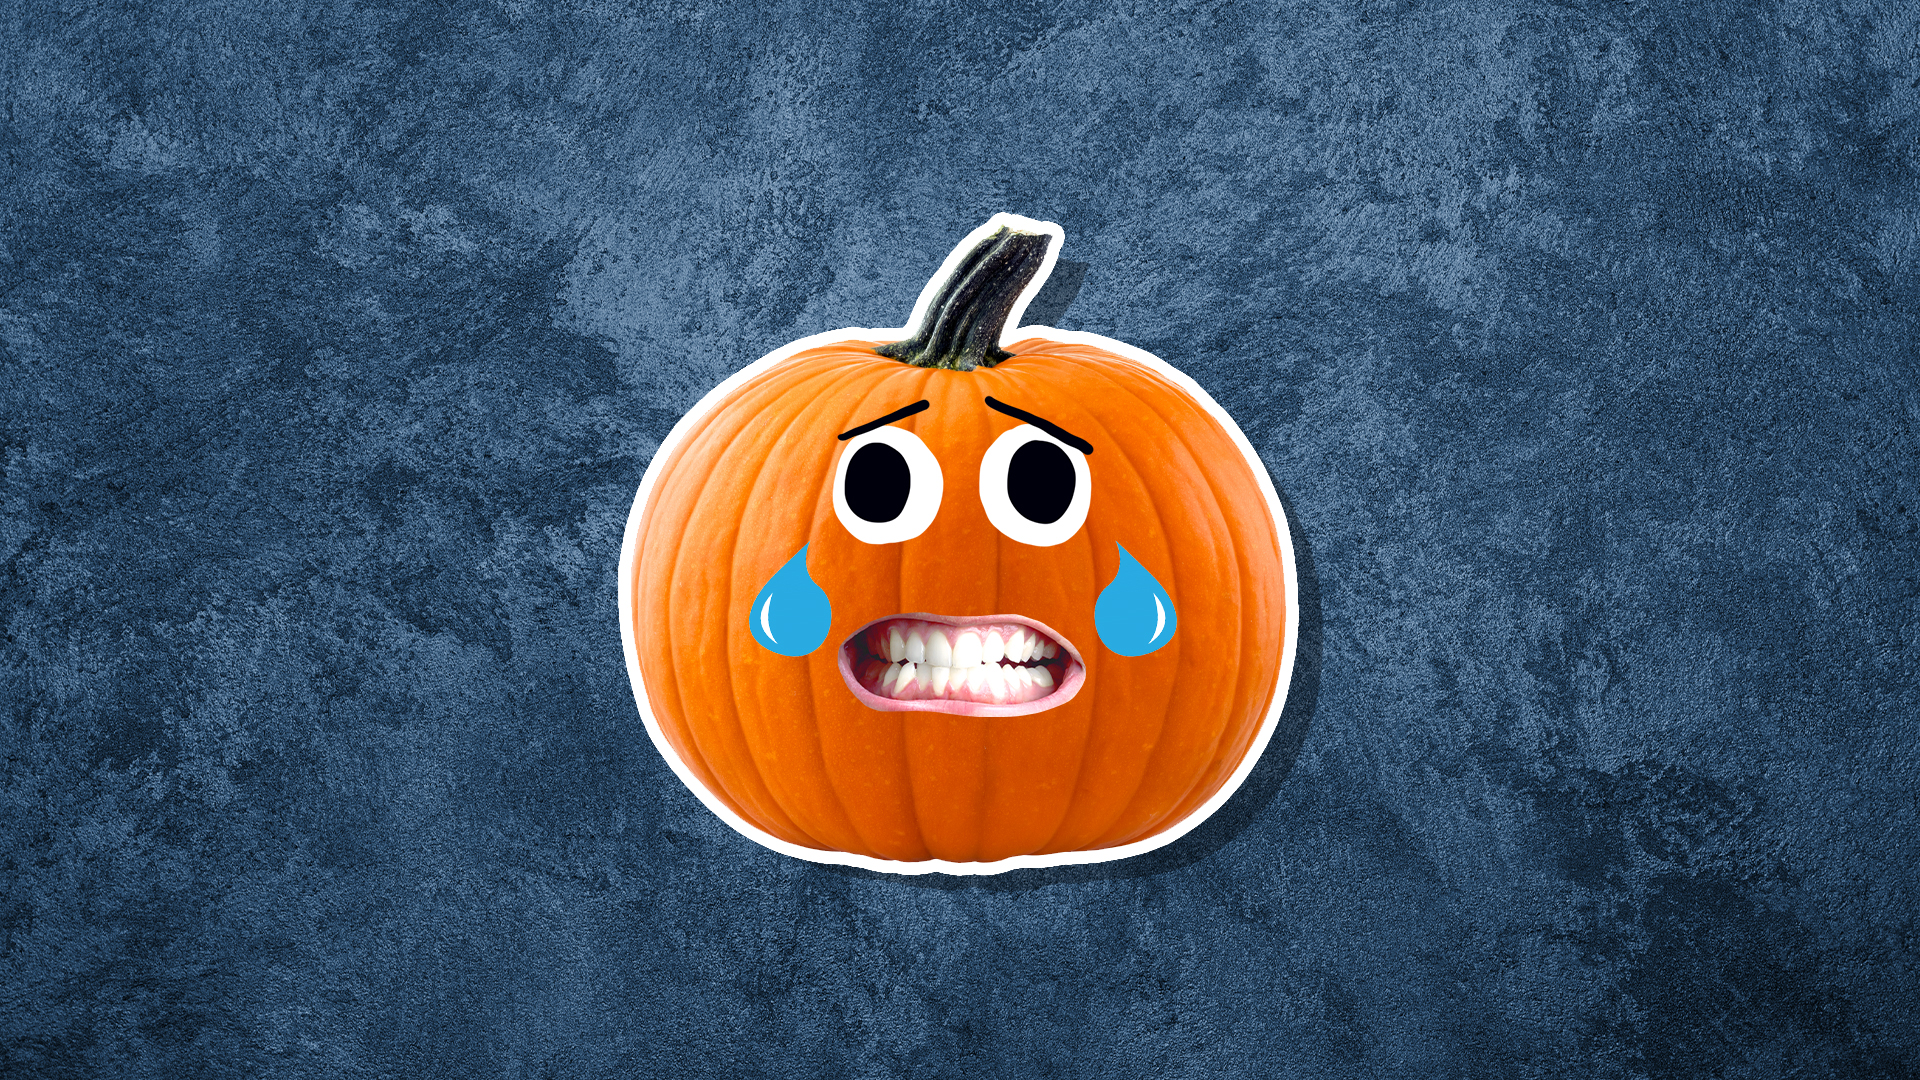 A cry laughing pumpkin